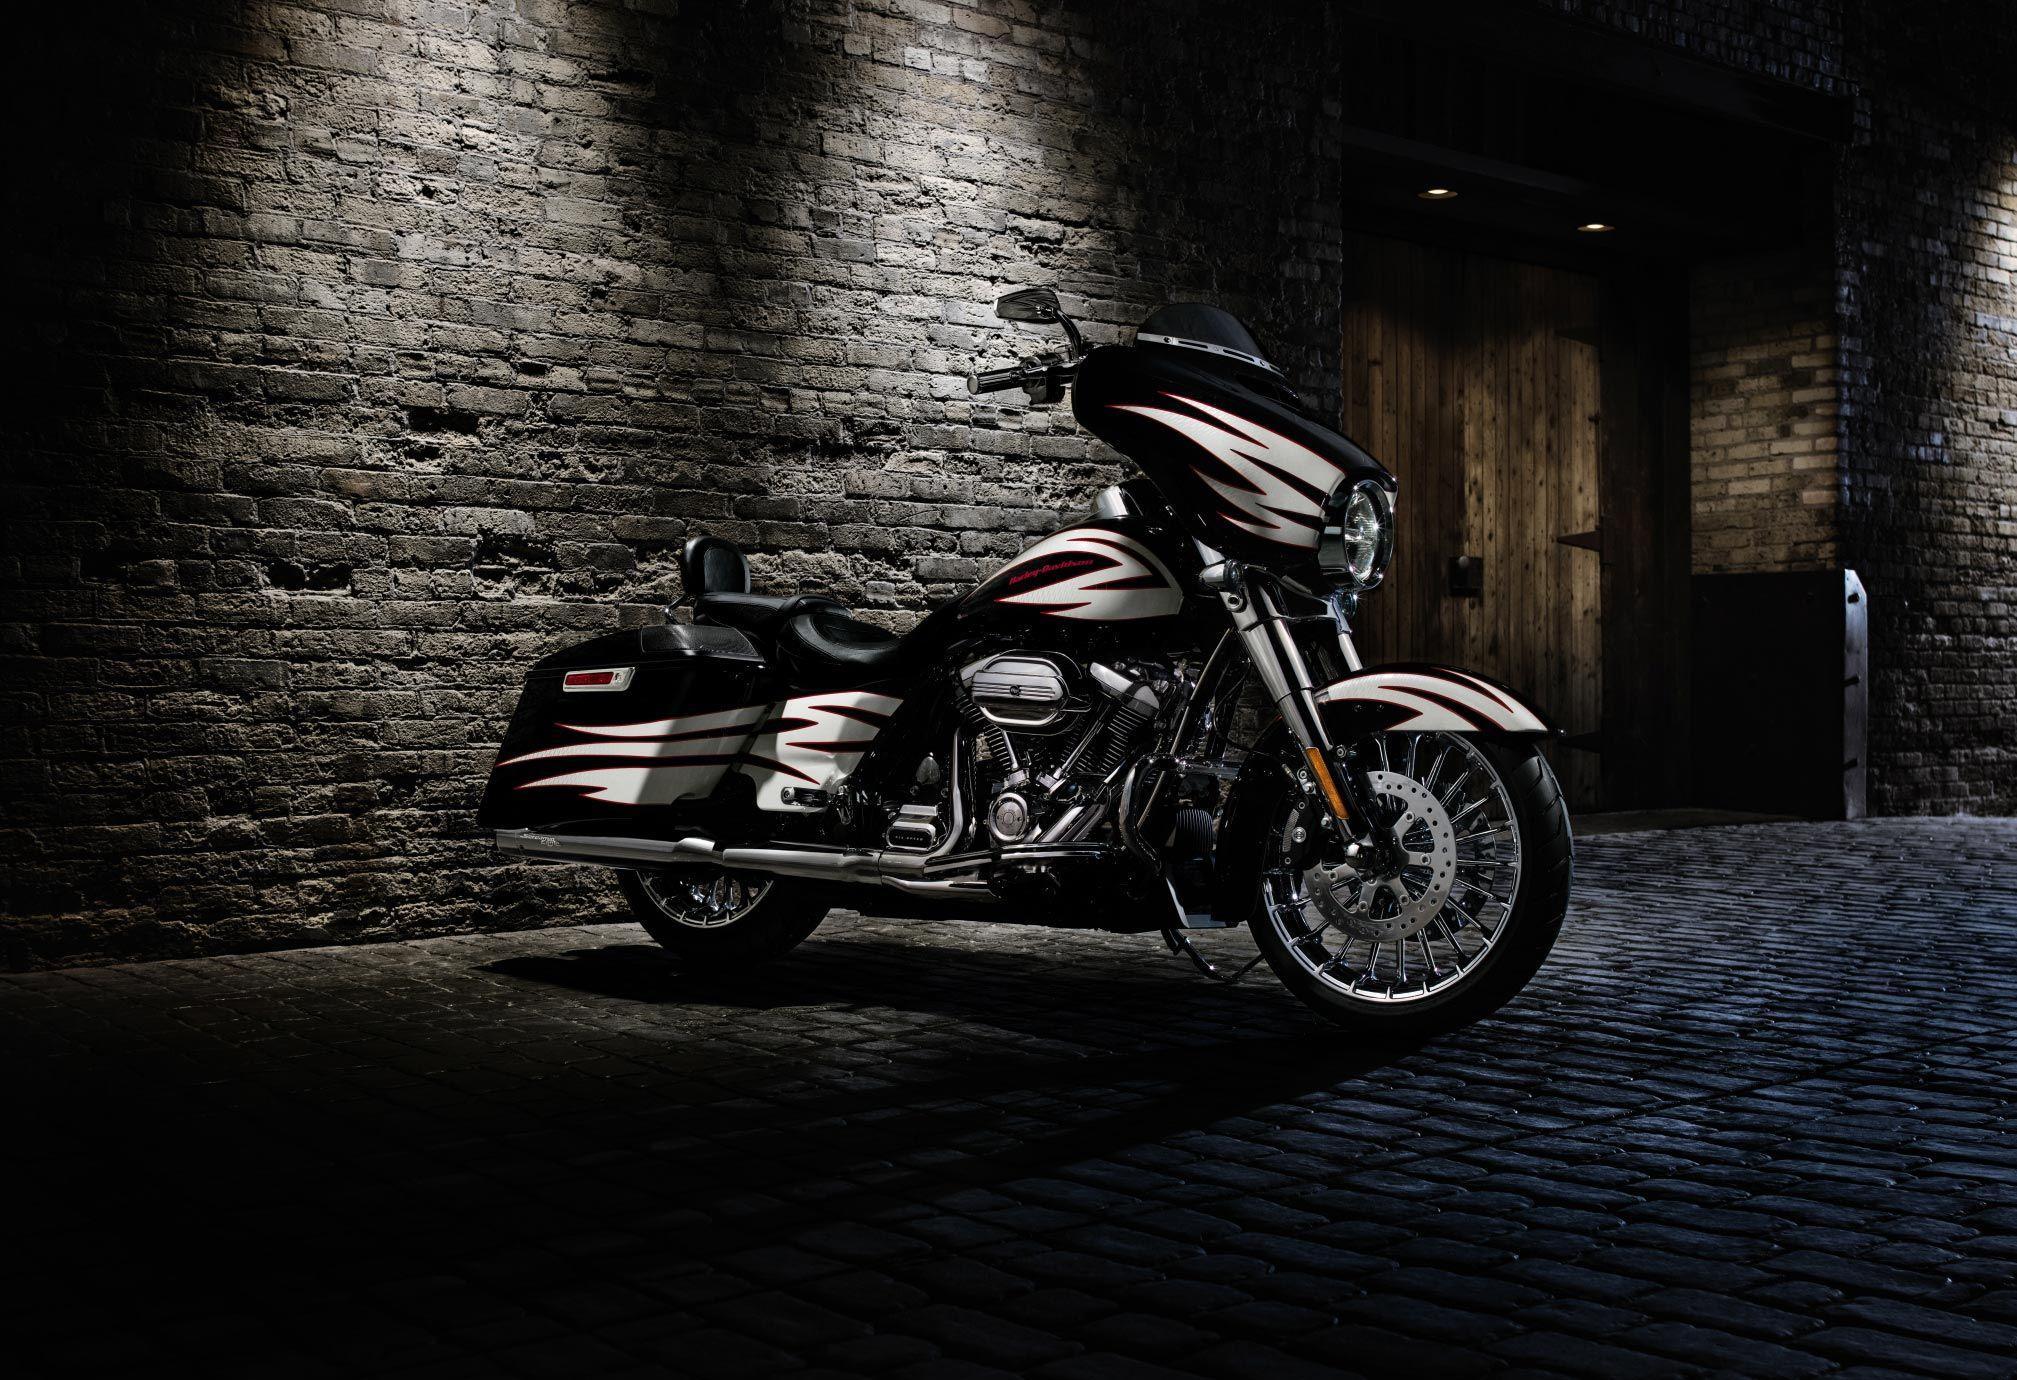 Harley Davidson Street Glide Full HD Wallpaper And Background